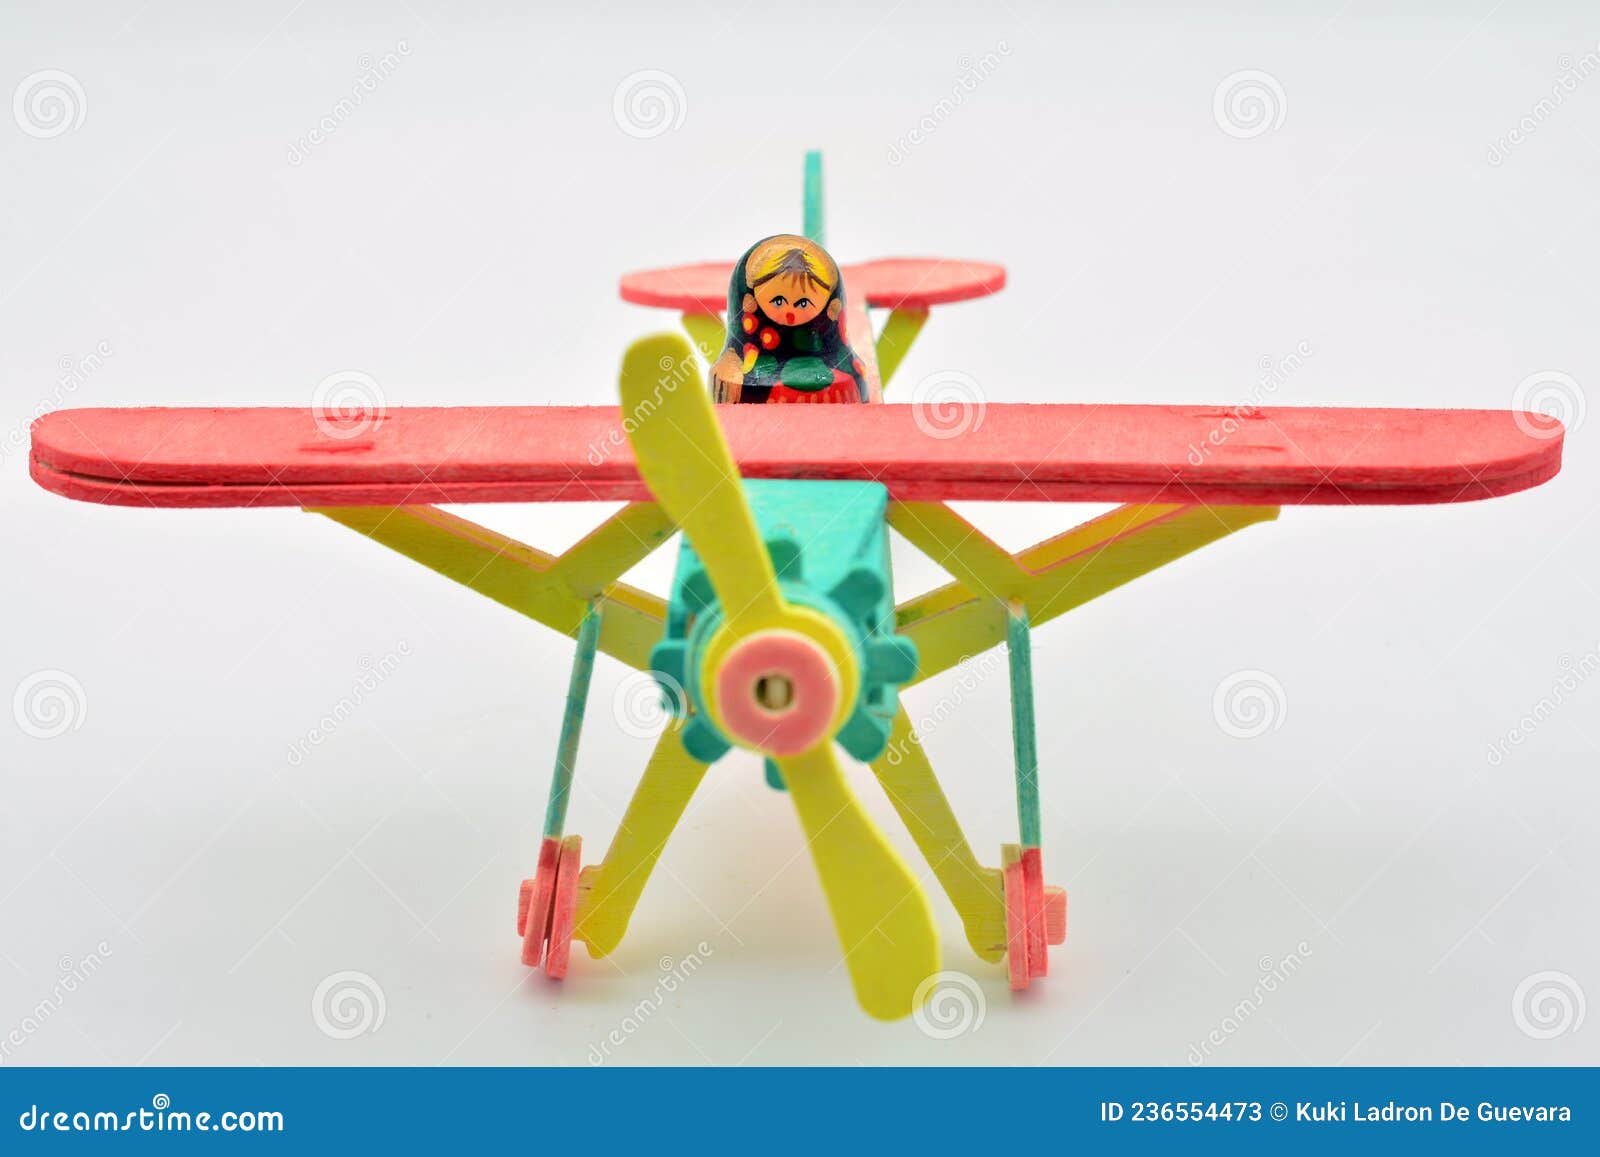 matryoshka doll mounted on a toy plane